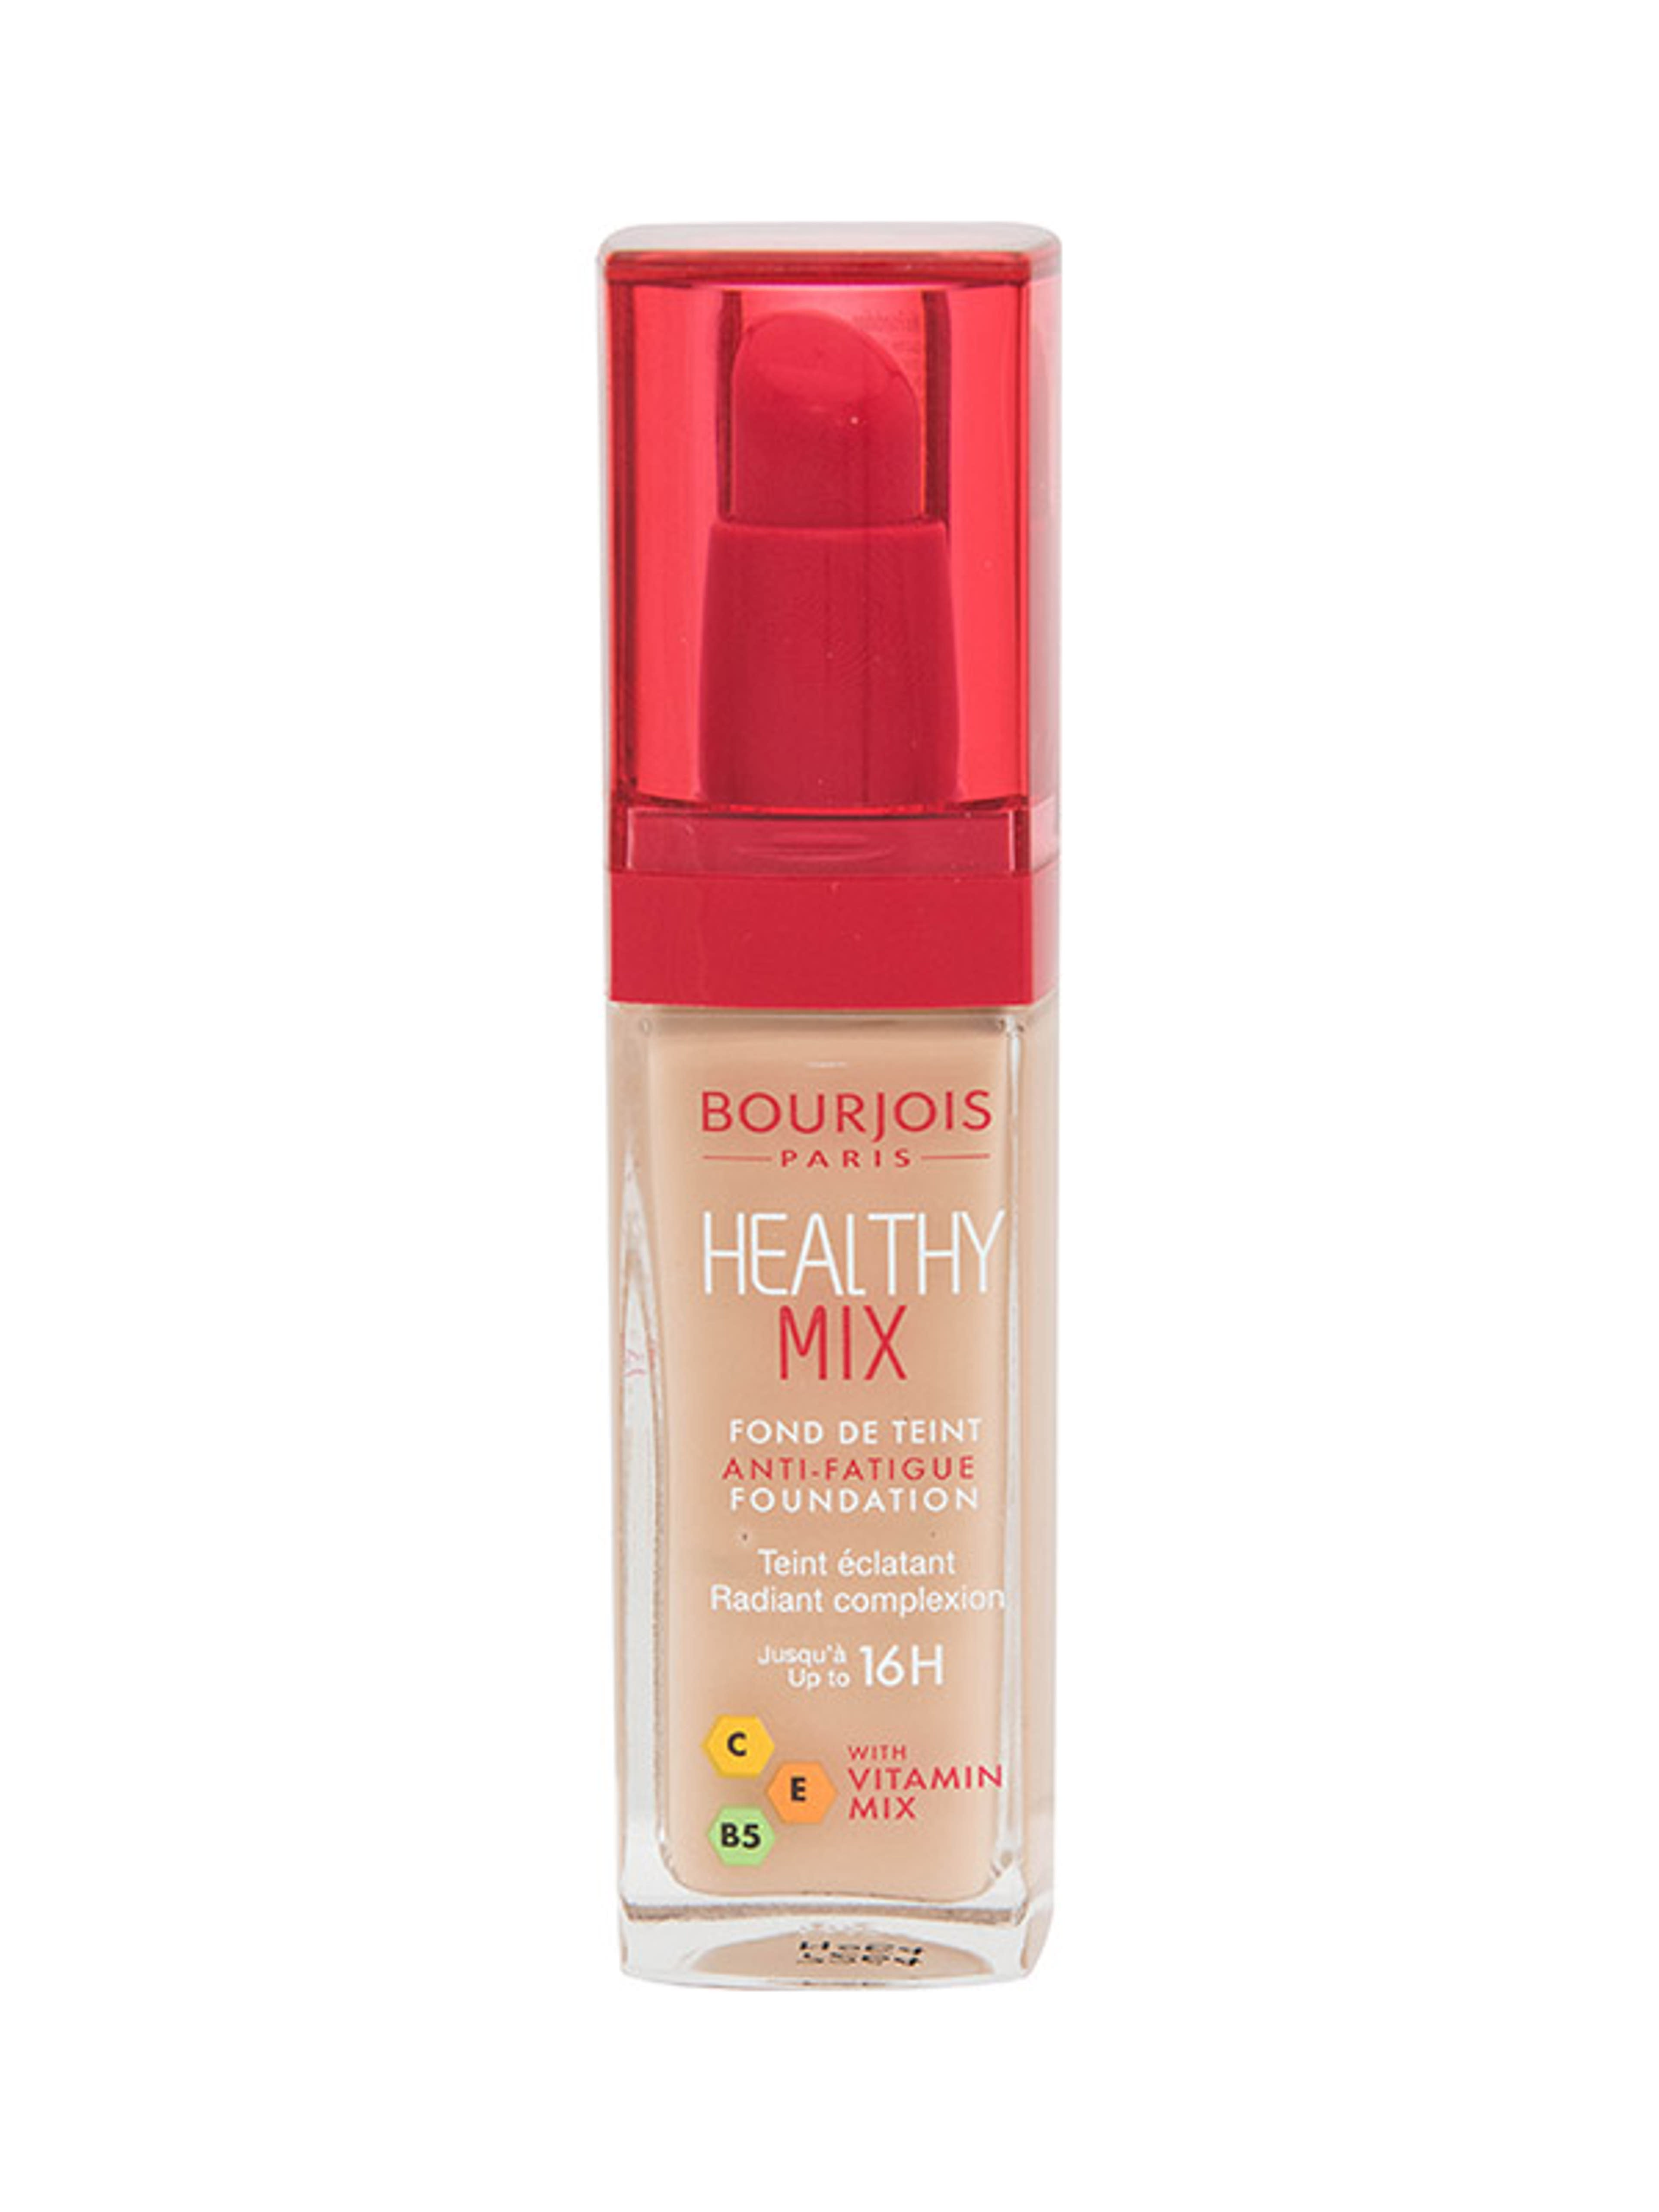 Bourjois alapozó healthy mix /54 - 1 db-1